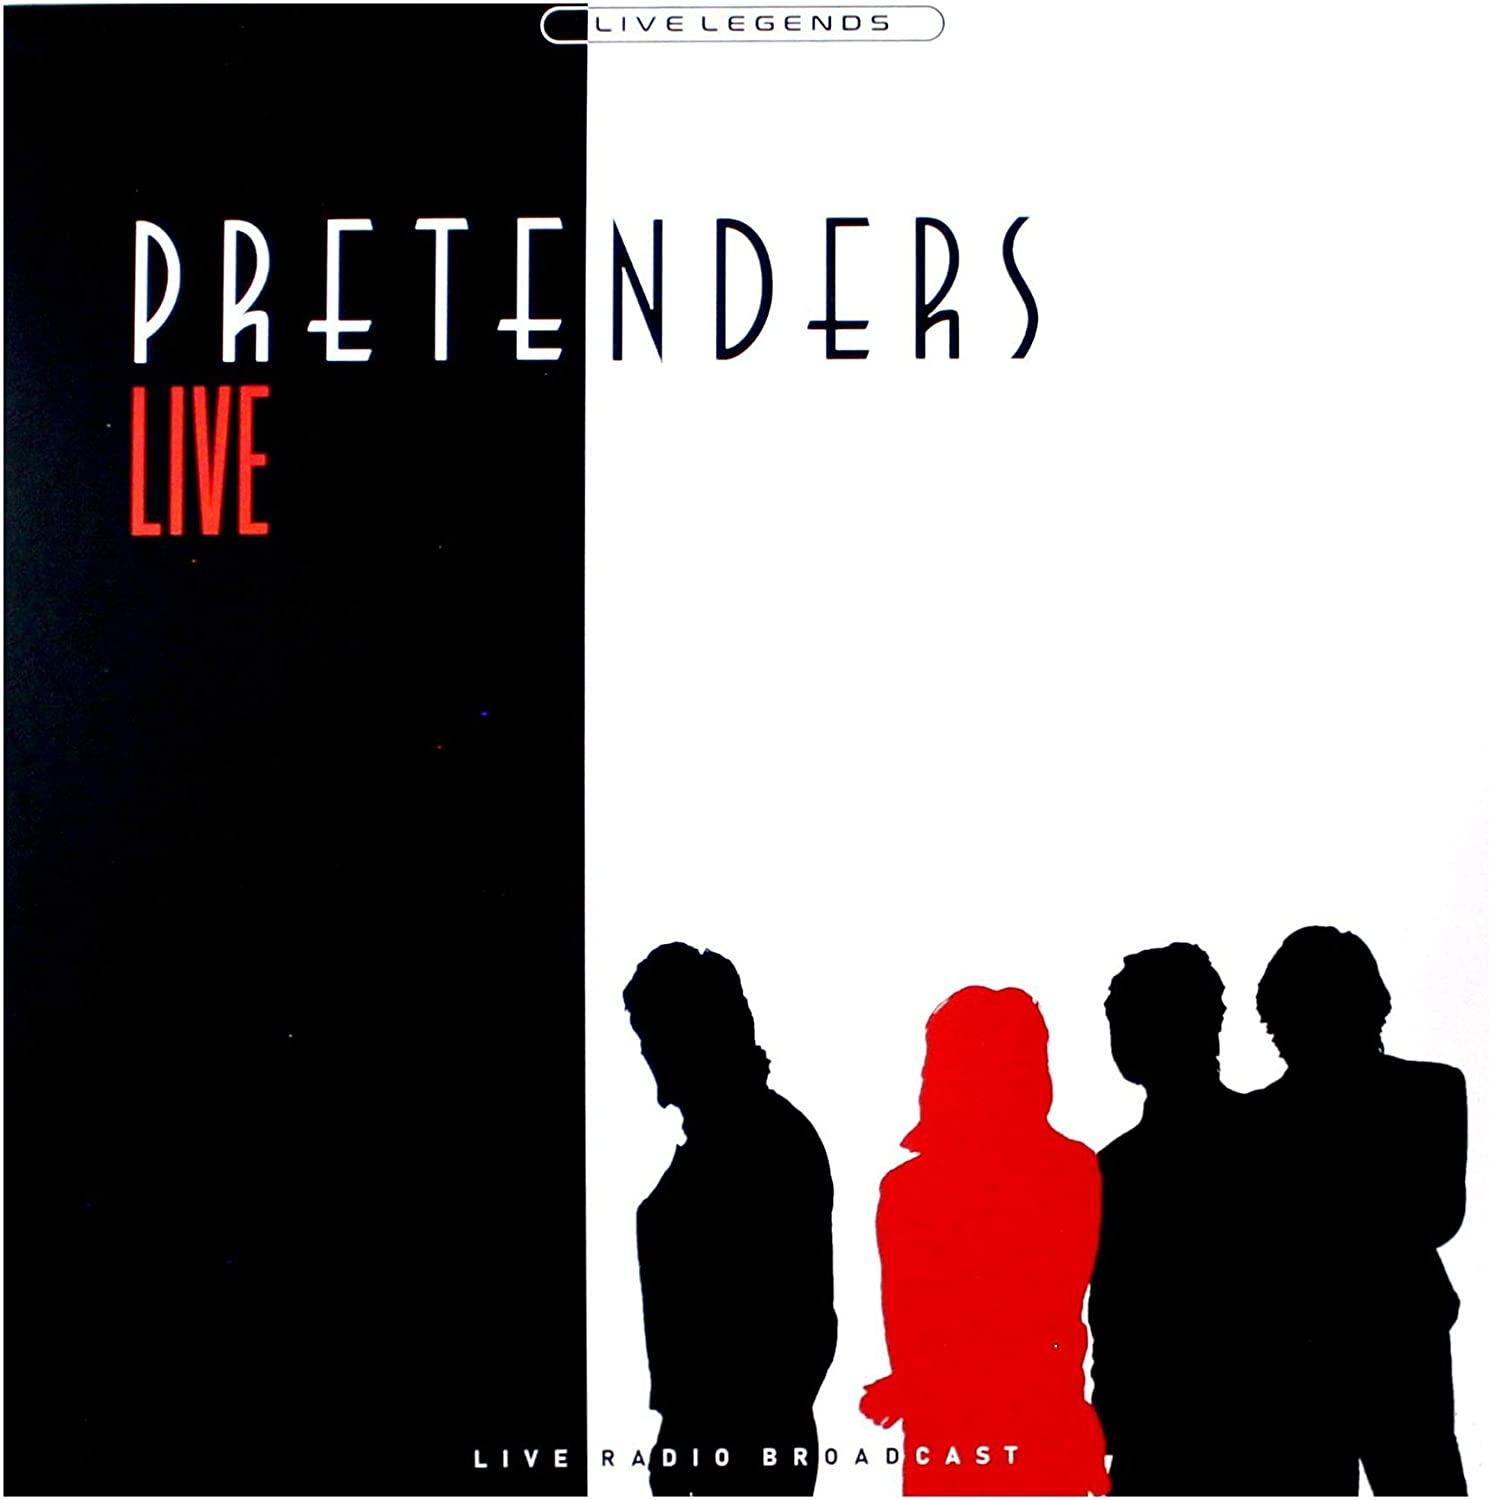 The Pretenders - Live (2020) LP